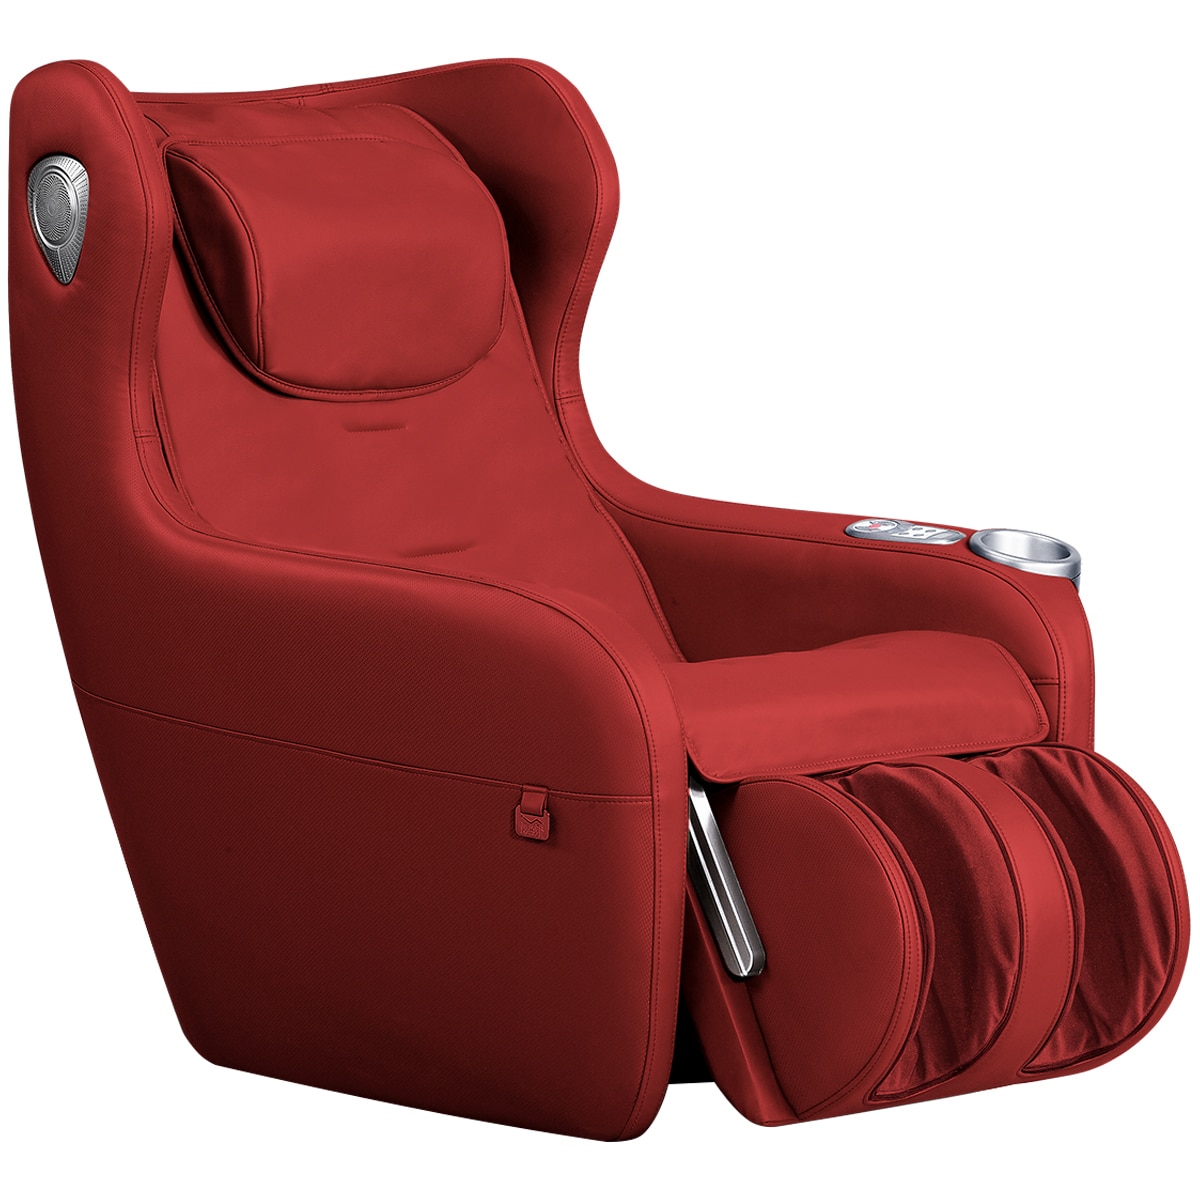 Masseuse Massage Chairs Health Massage Chair - Red